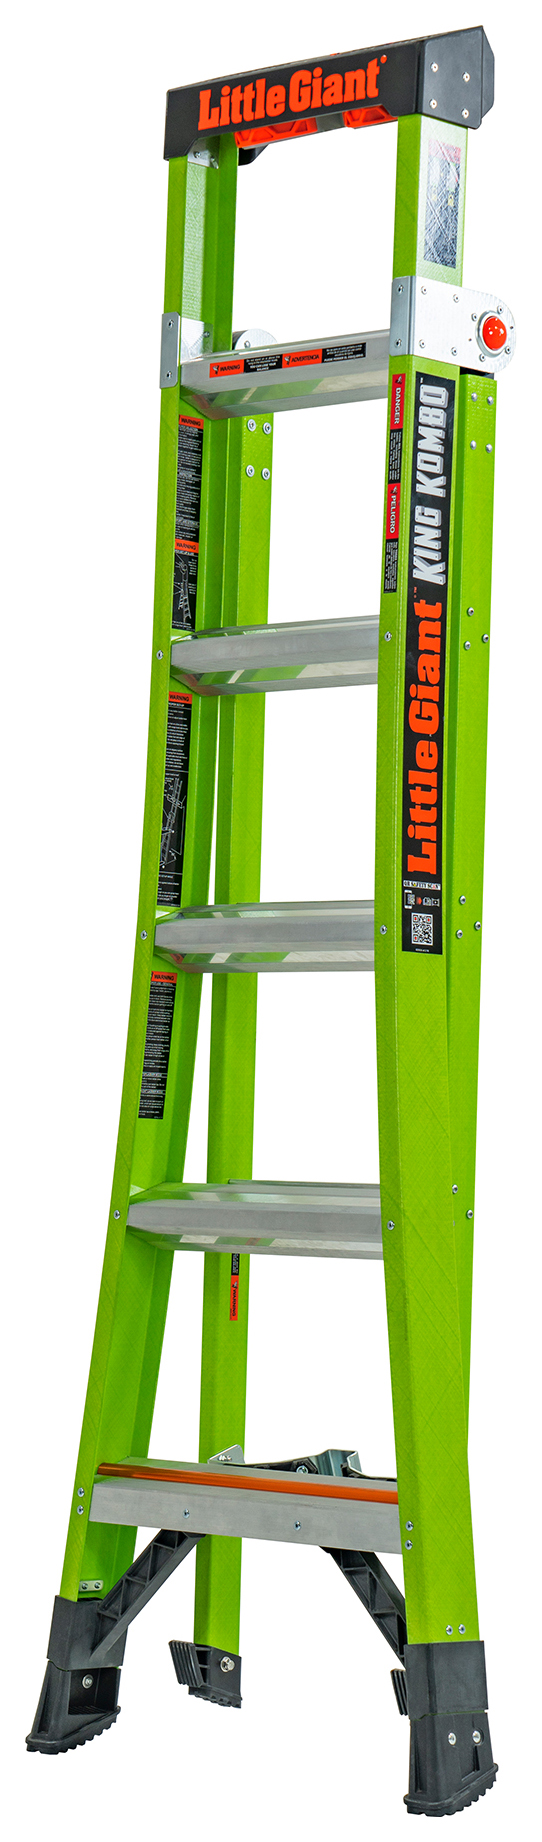 Little Giant 6 Tread King Kombo Industrial Extension Ladder